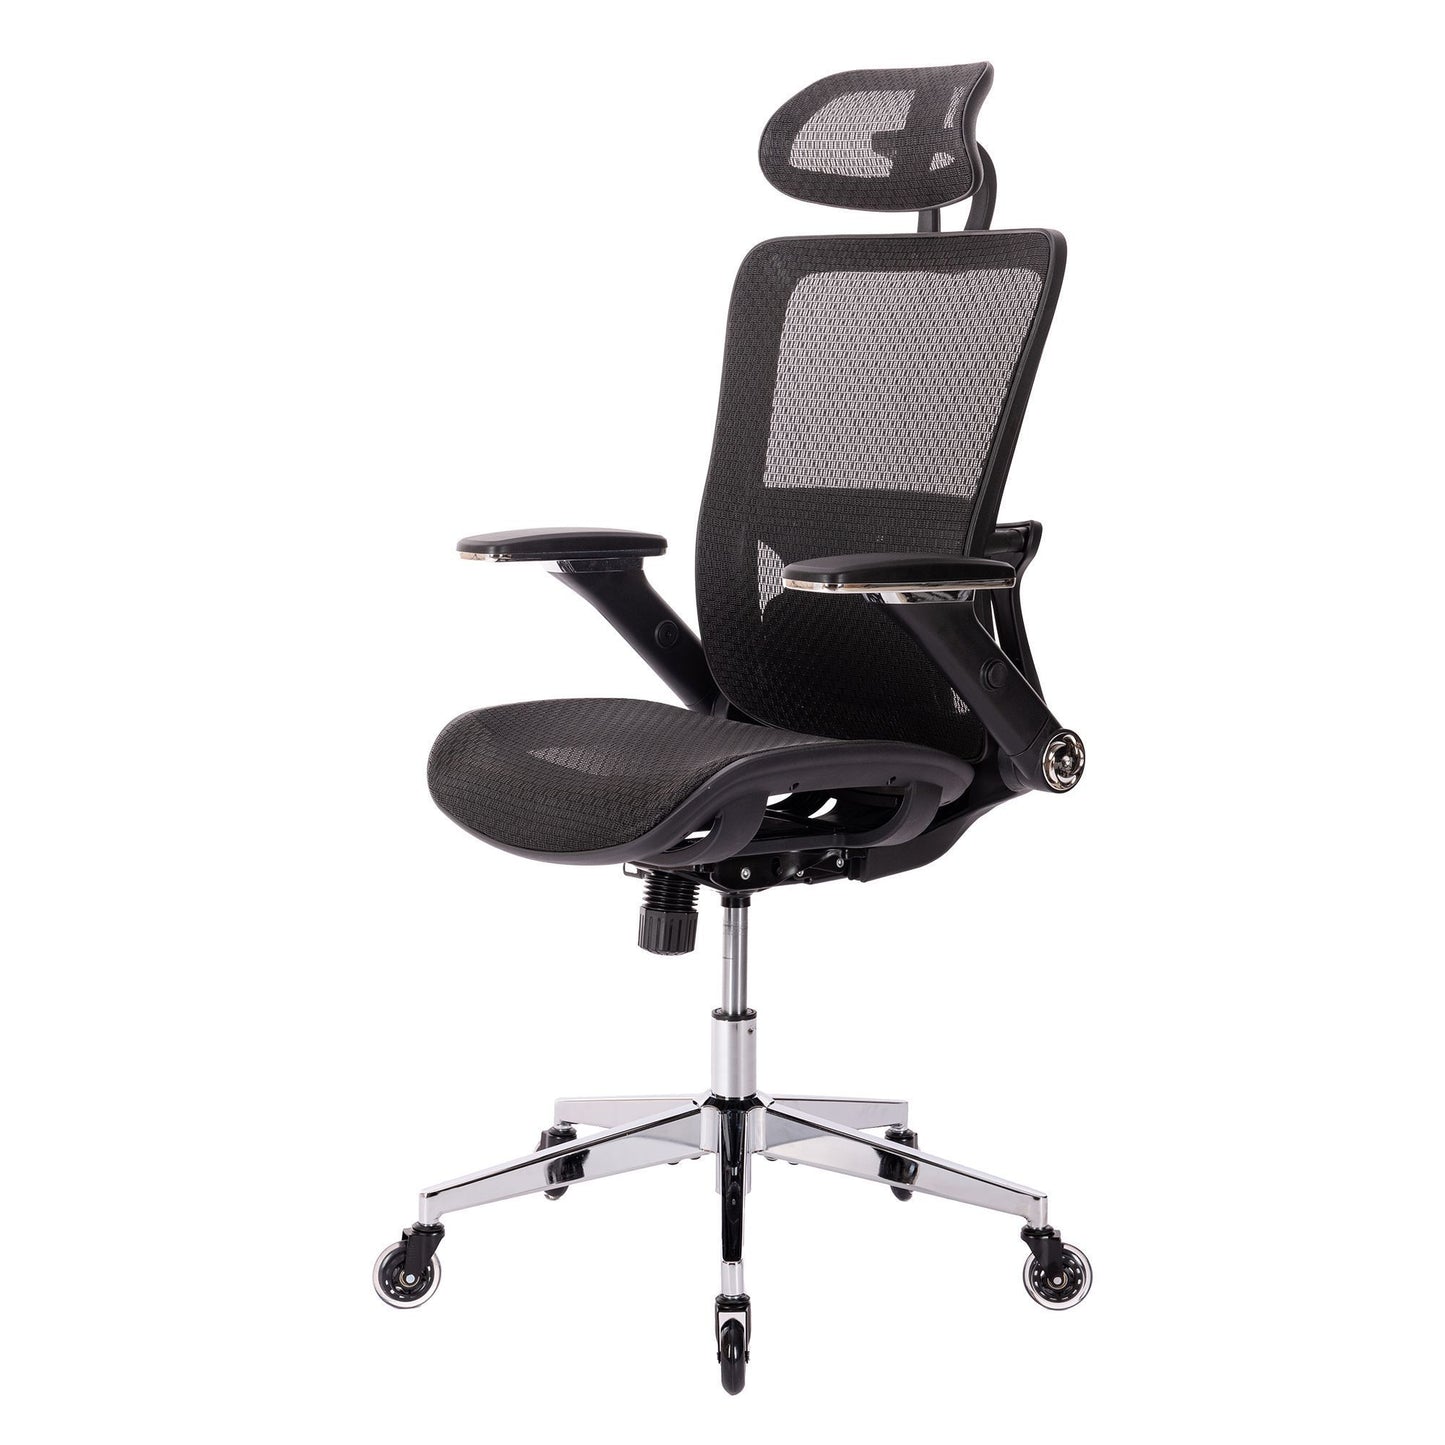 Ergona Black Mesh Office Chair w/ Adjustable Headrest with Flip-Up Arms